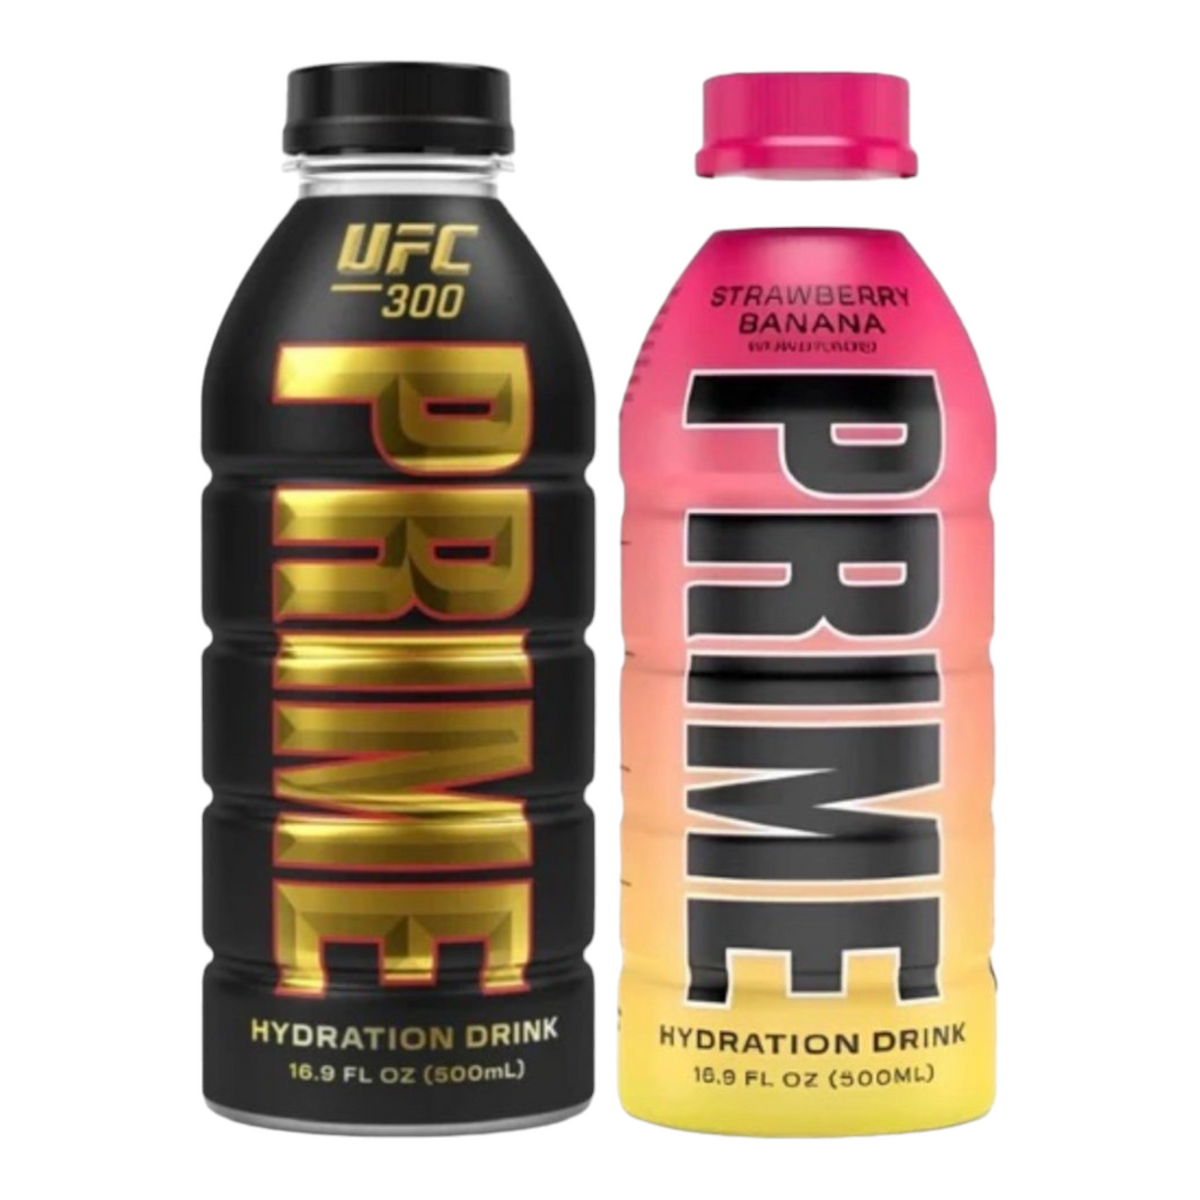 Prime Hydration Sports Drink 2-Pack, UFC -300 & Strawberry Banana -Logan Paul & KSI Limited Edition UFC Bottles, 500ml Each,